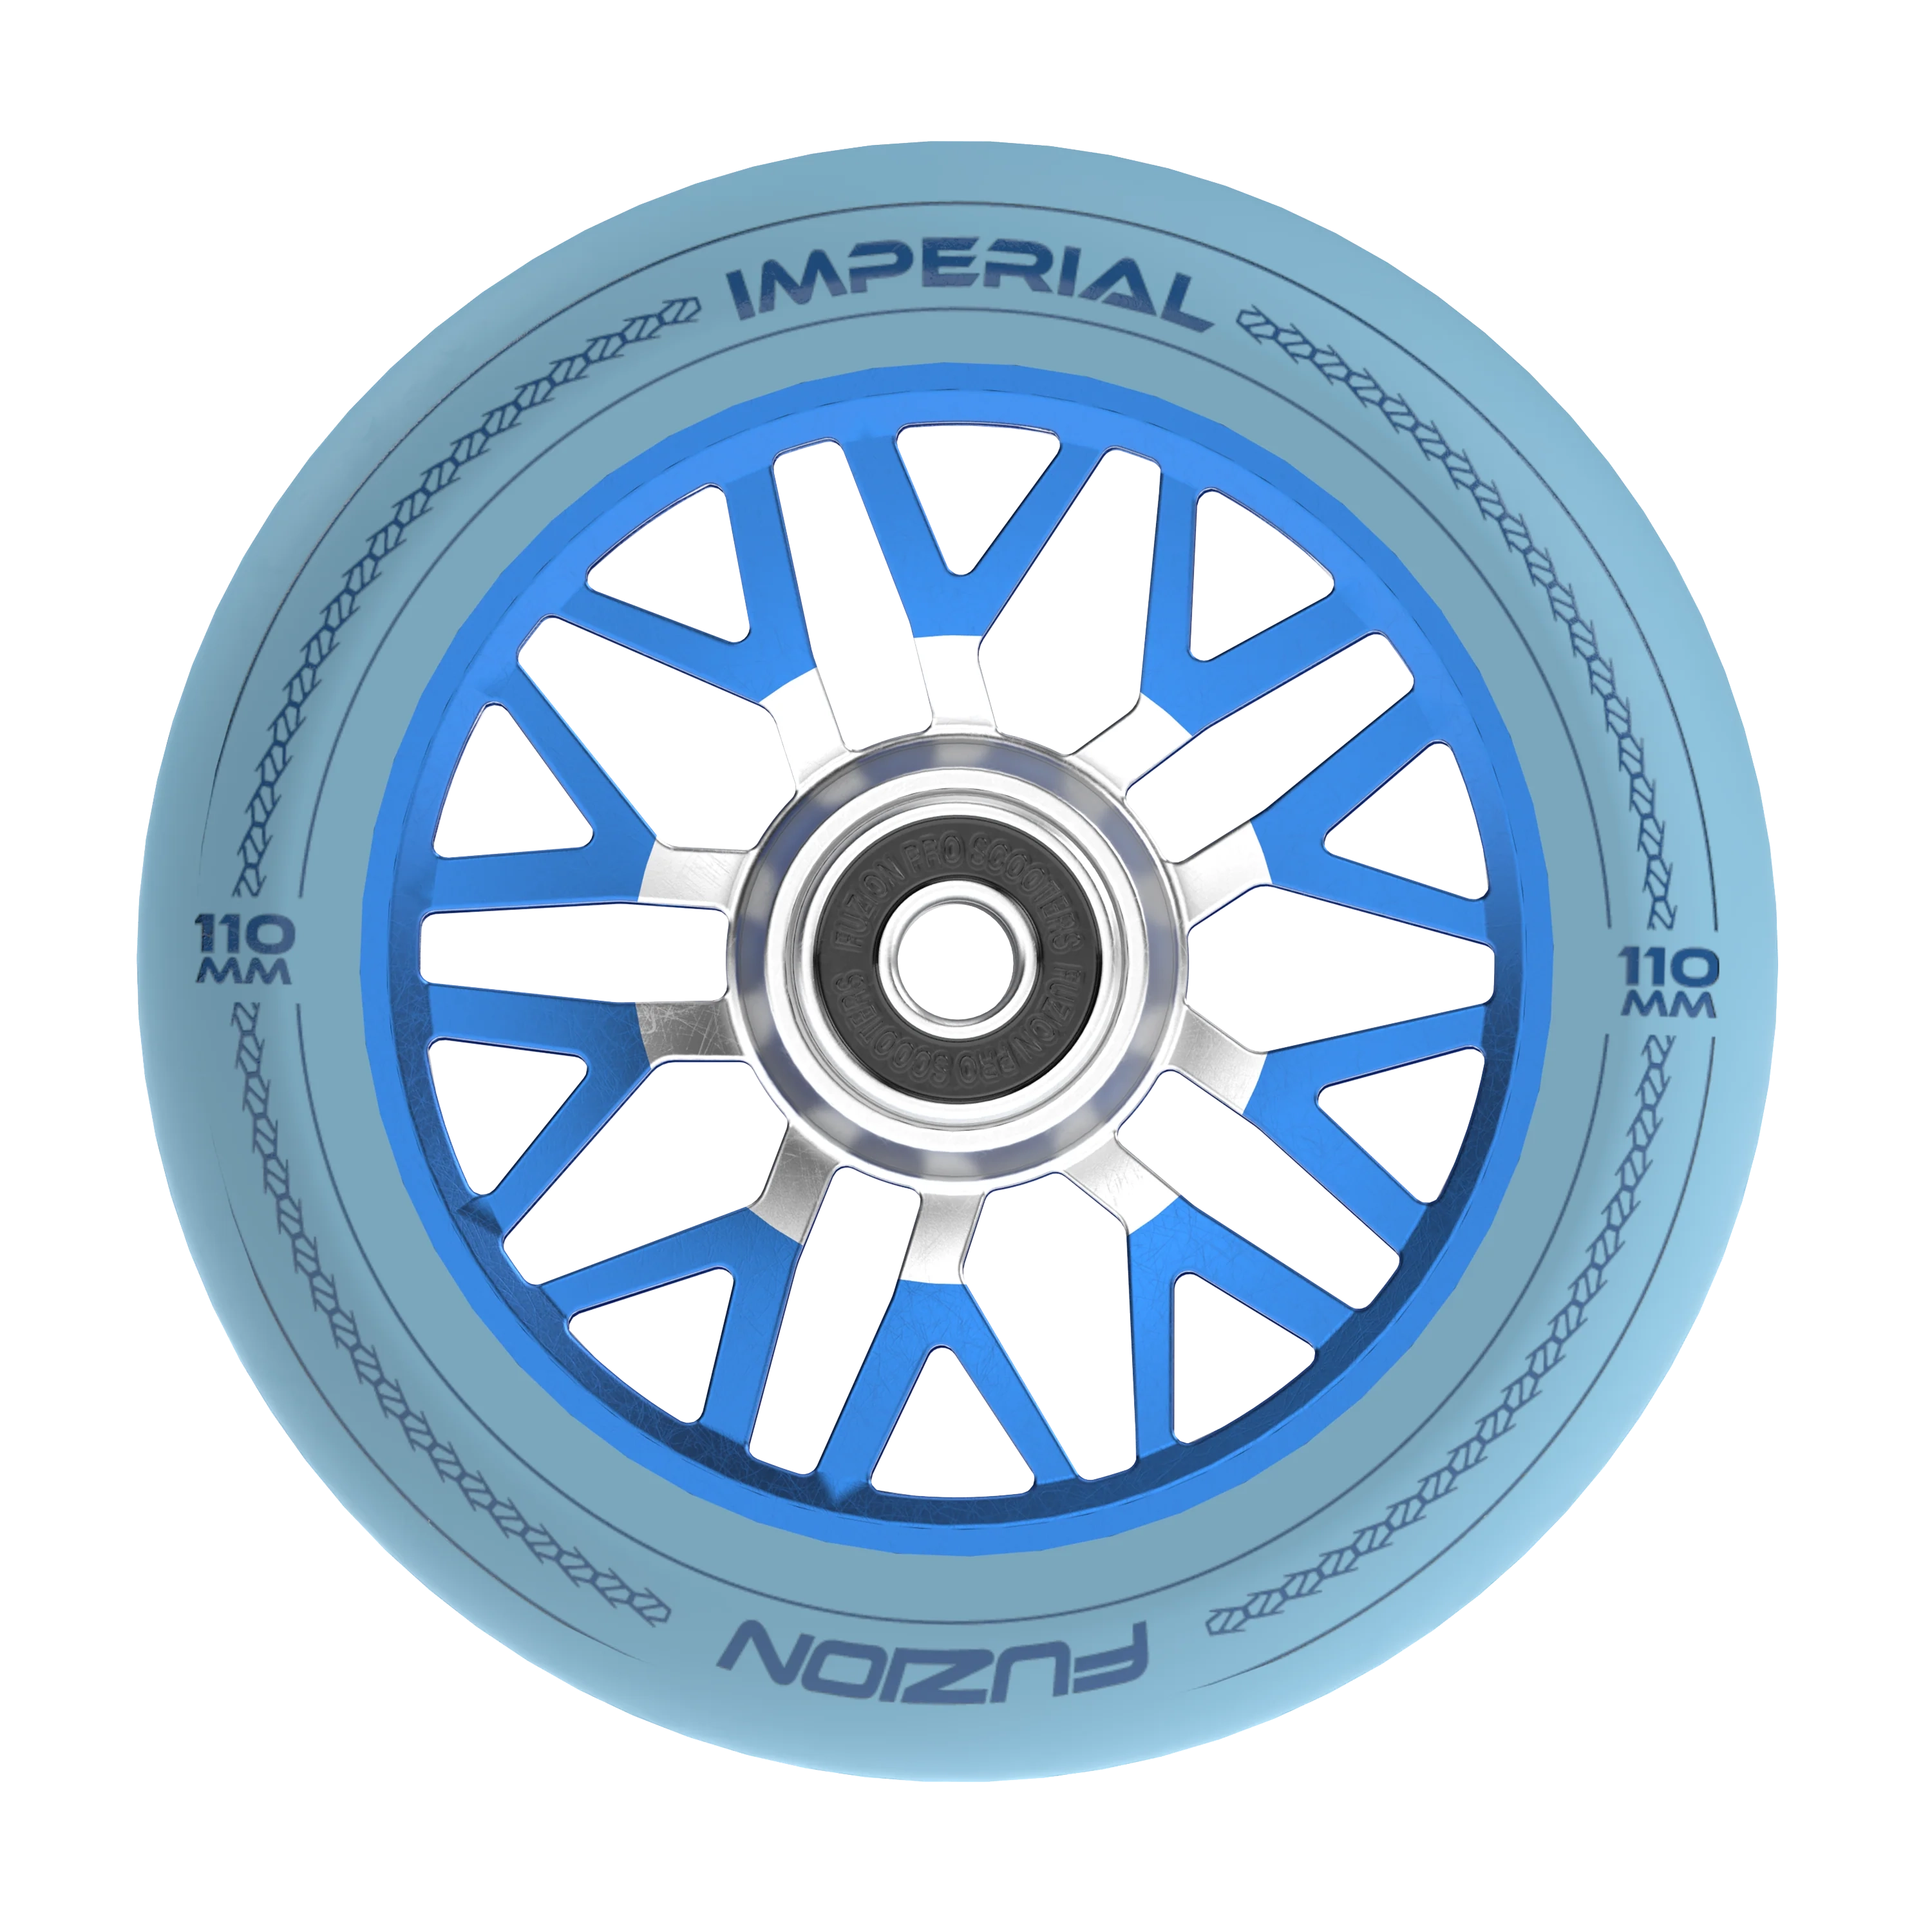 Fuzion Wheel Imperial 110mm